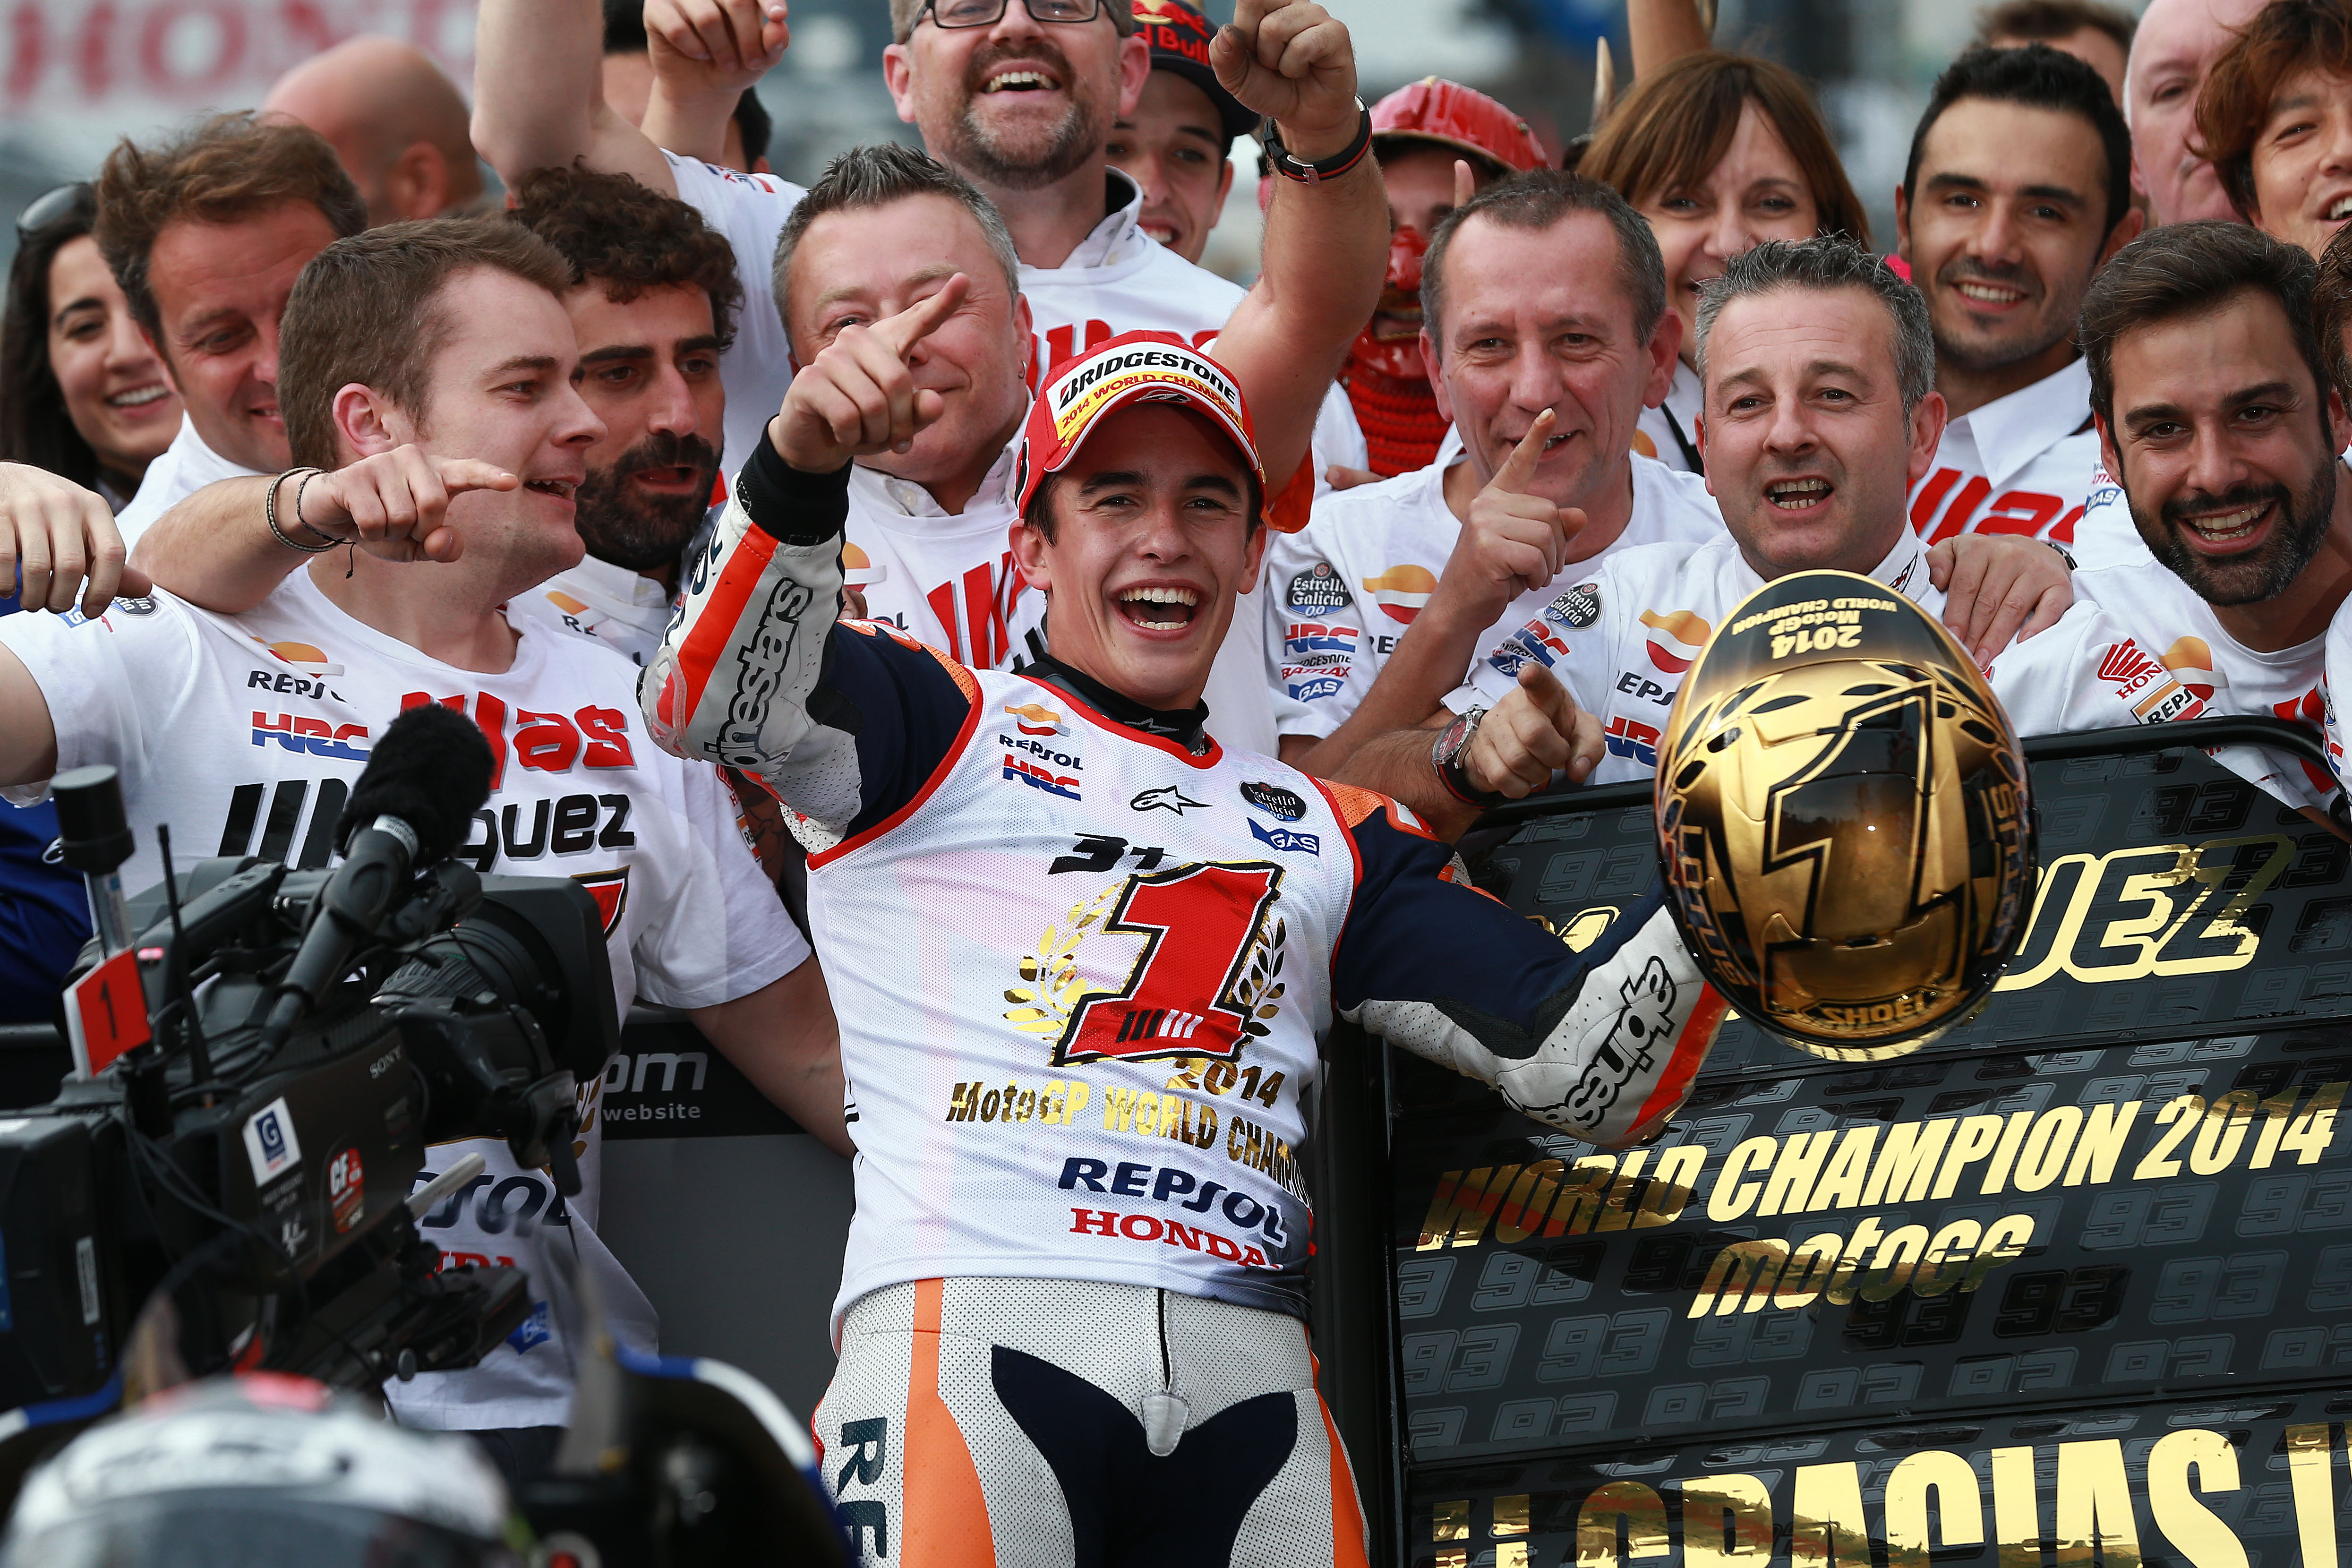 præcedens film Devise Marquez secures 2014 MotoGP World Championship title | Visordown